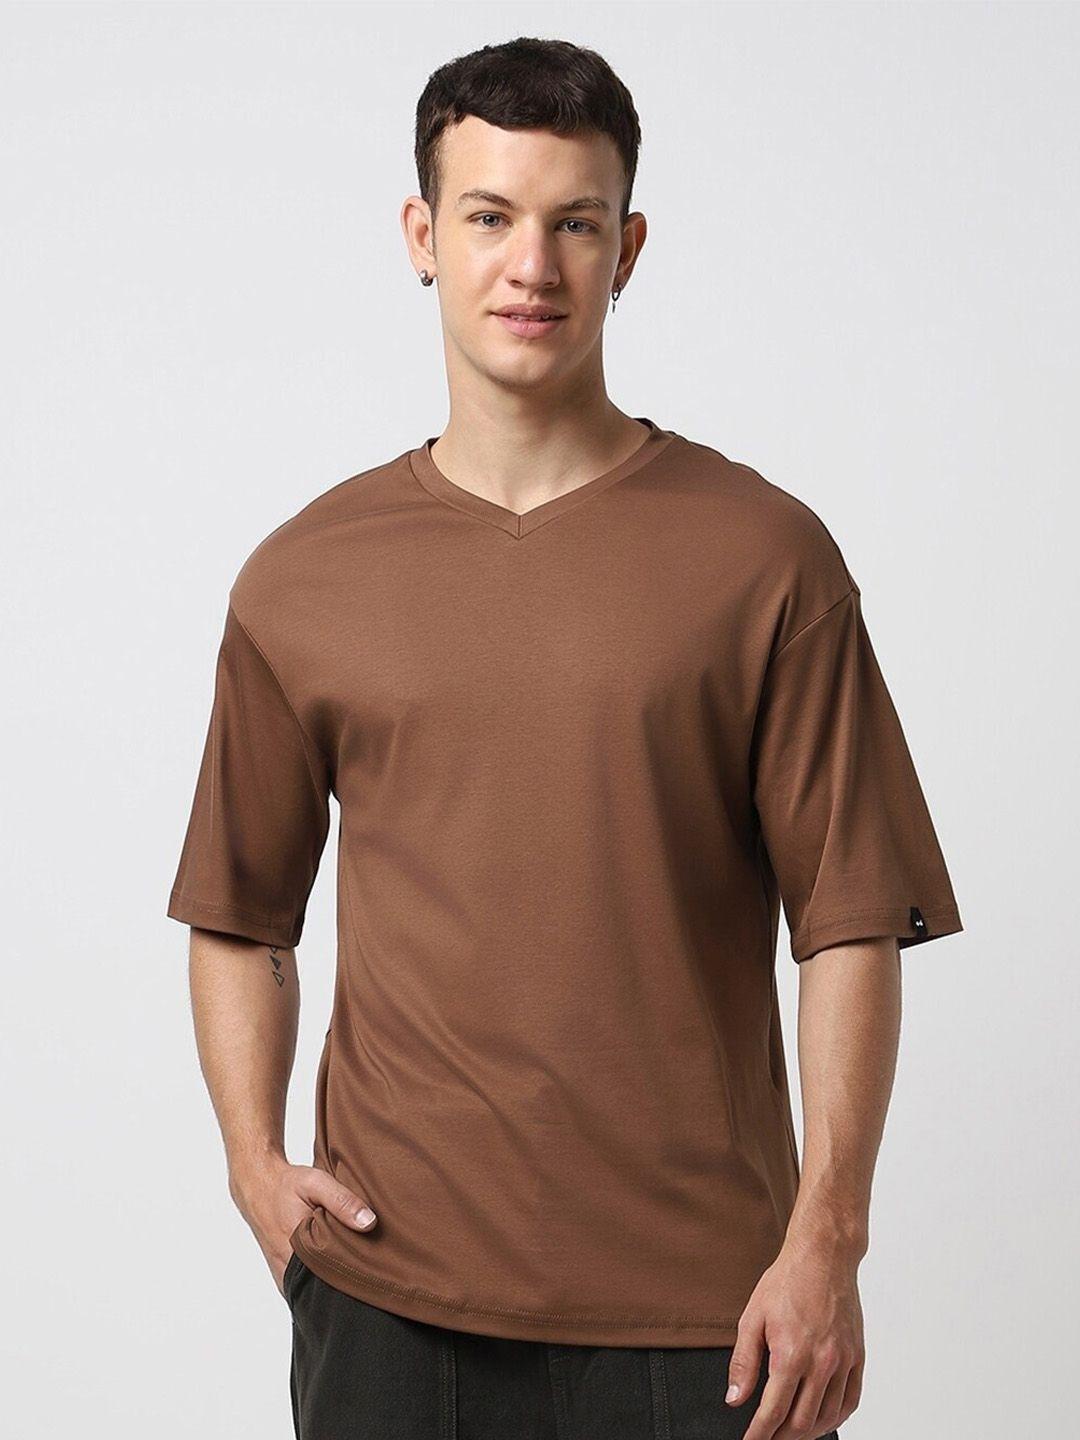 bewakoof v-neck drop-shoulder sleeves oversized pure cotton t-shirt